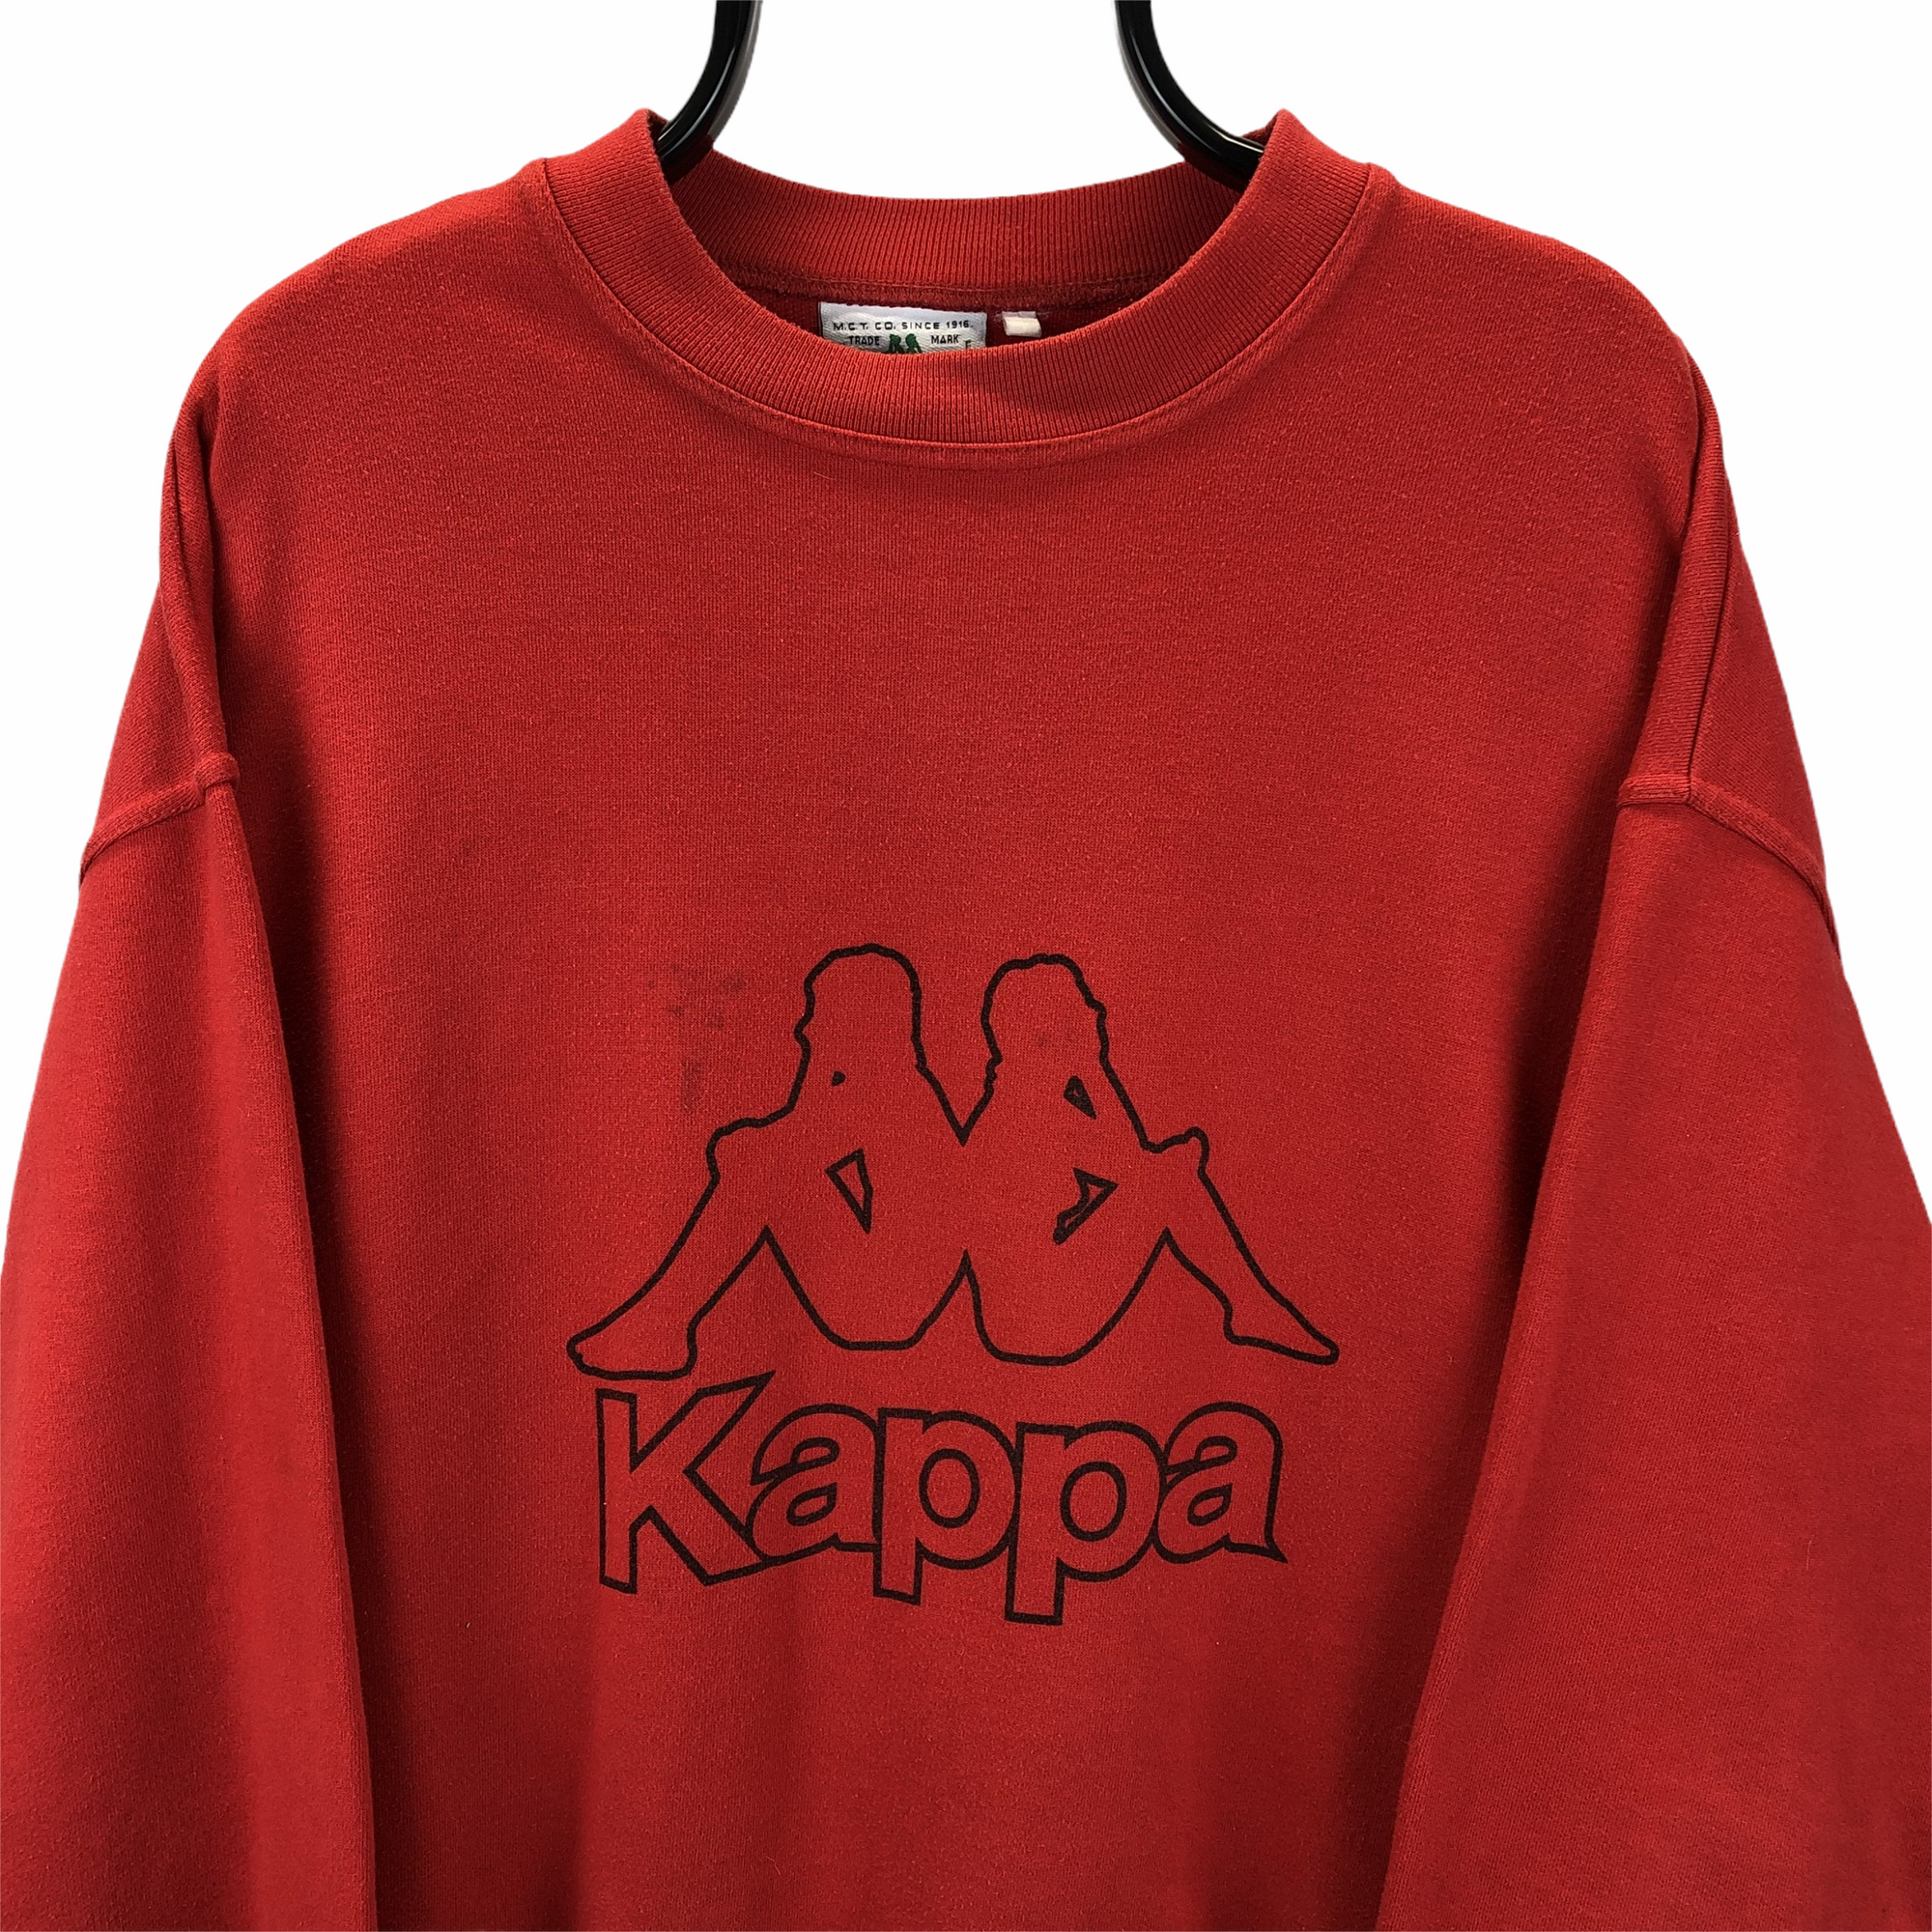 Vintage 90s Kappa Spellout Sweatshirt in Red - Men's XL/Women's XXL